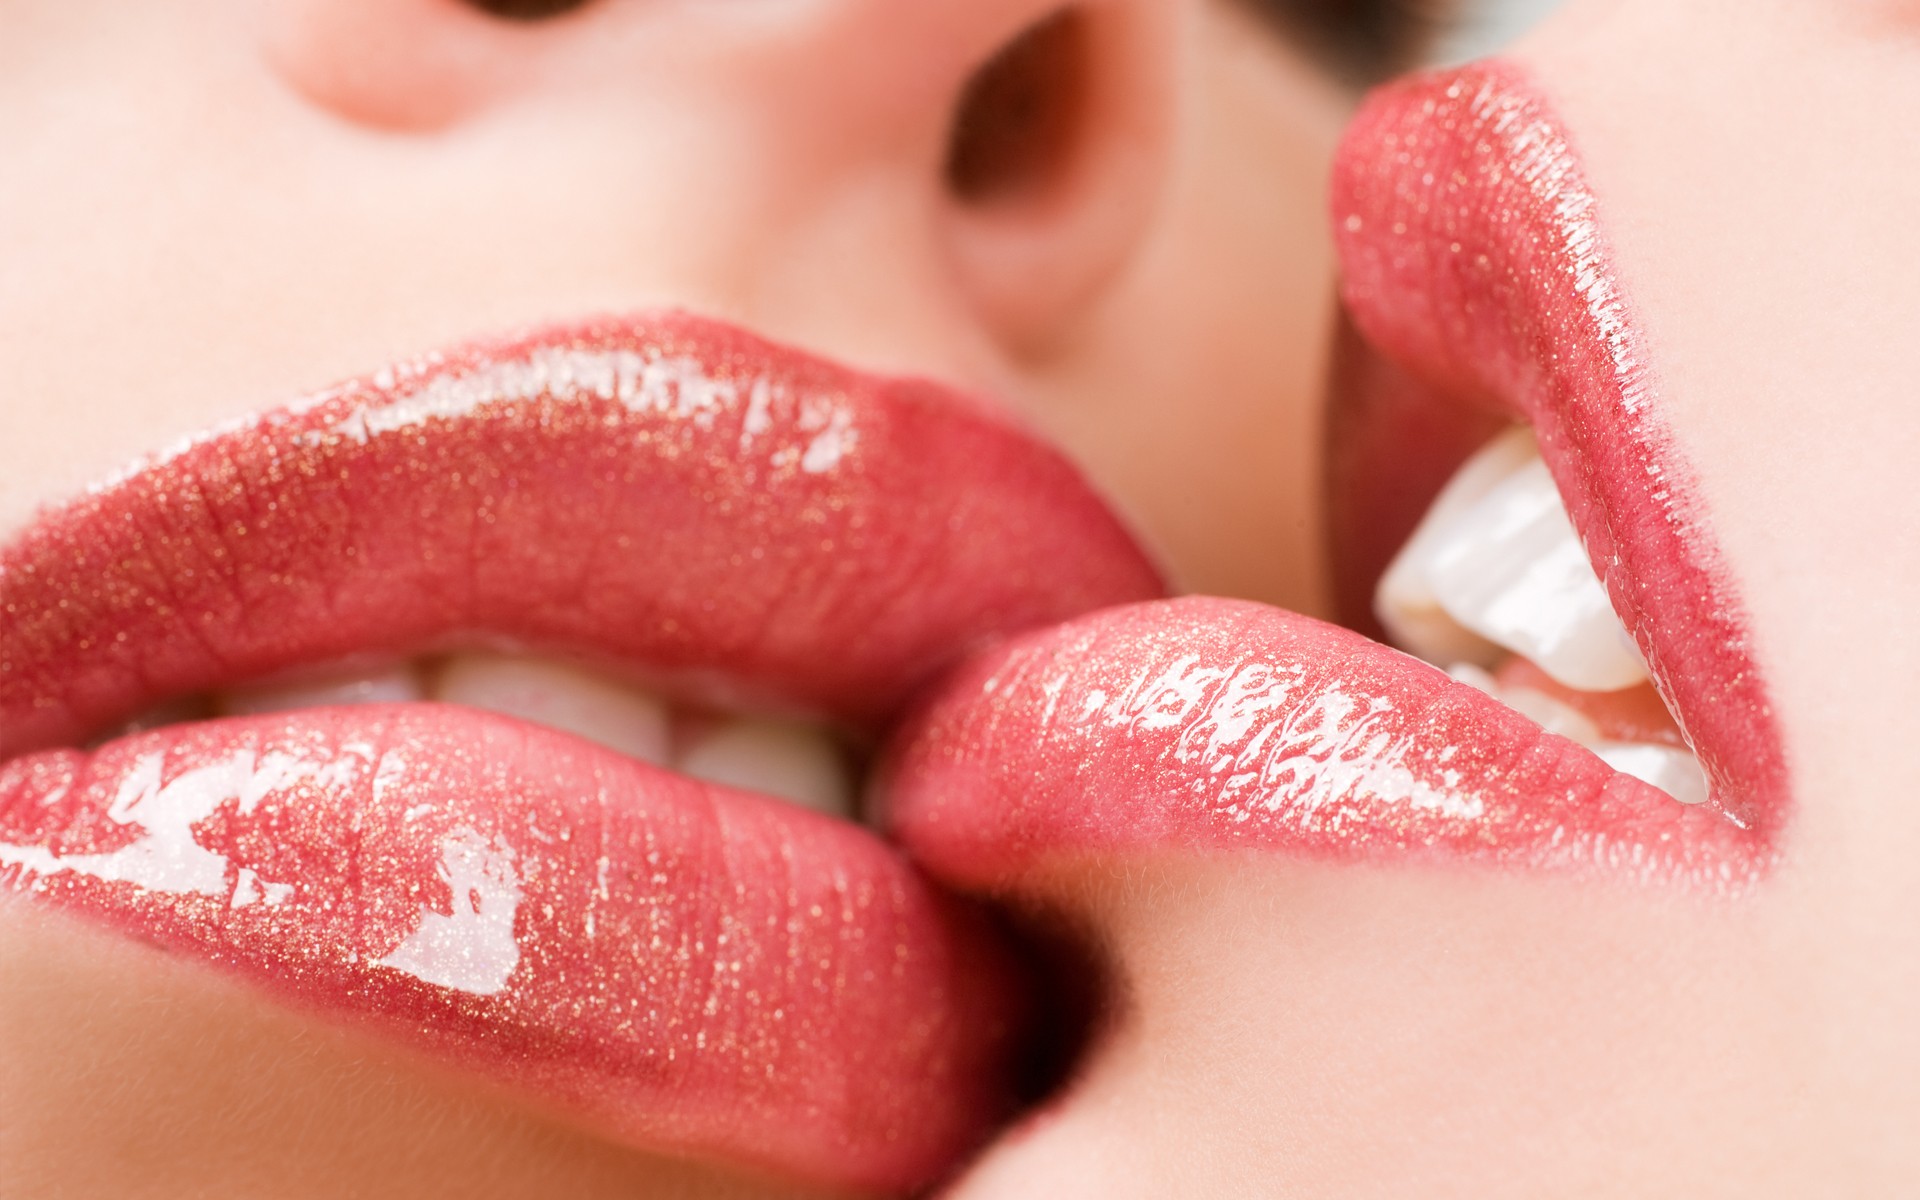 People 1920x1200 lips lipstick mouth open mouth kissing closeup women model lesbians red lipstick teeth nose juicy lips two women